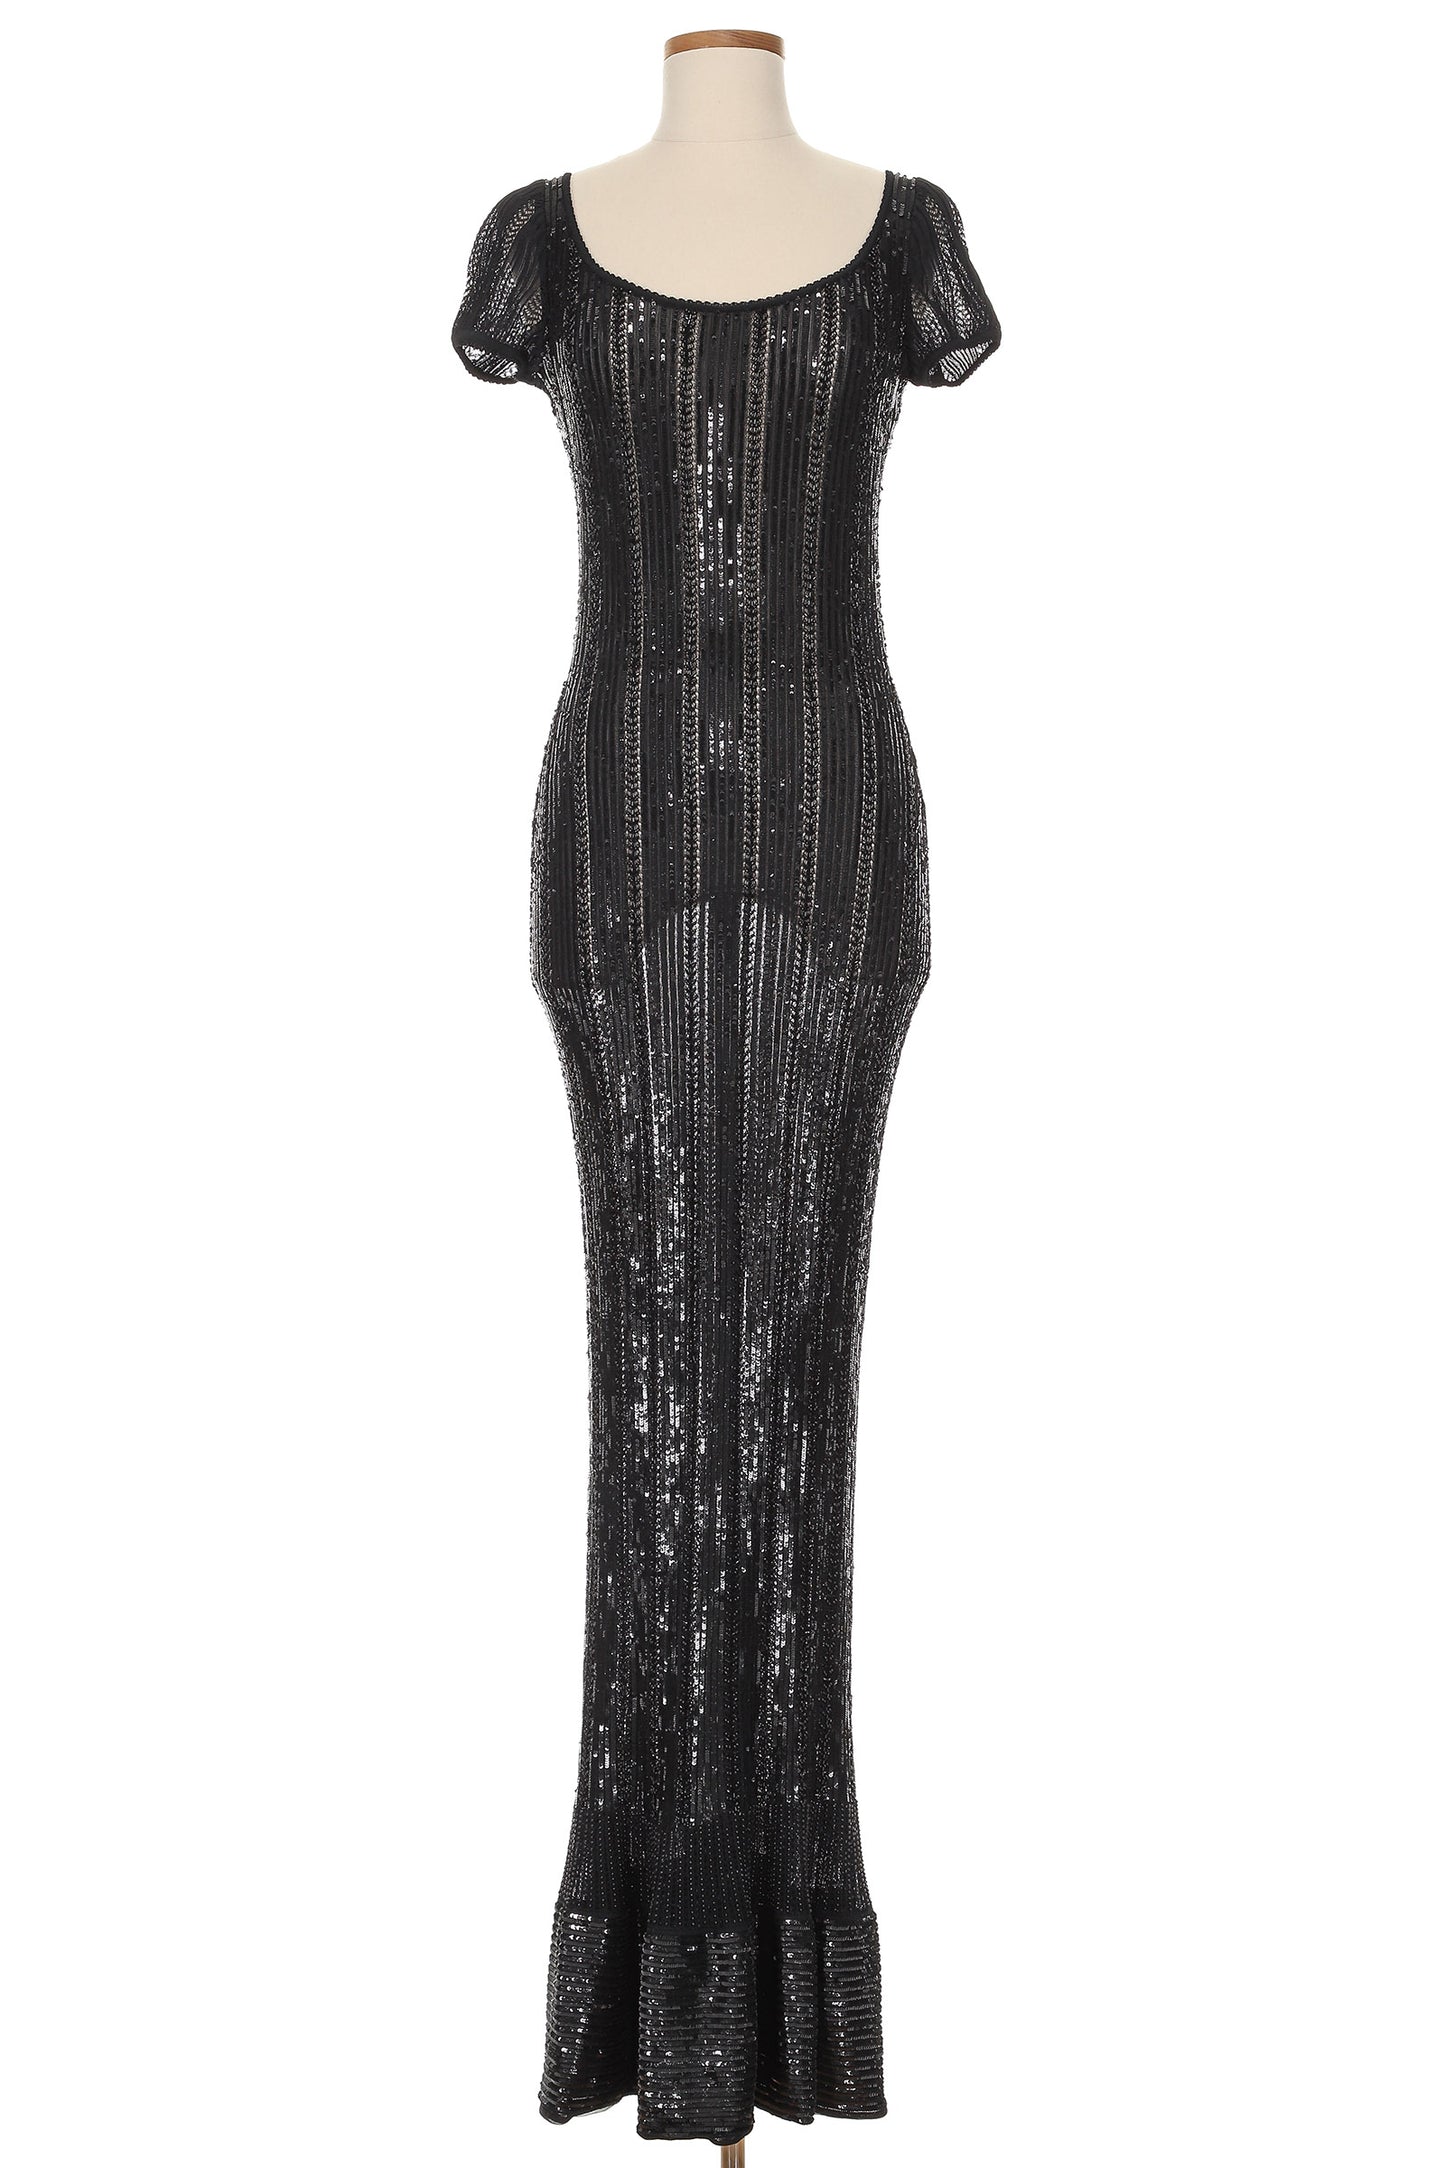 Alaia S/S 1996 Beaded Dress – Vintage Grace